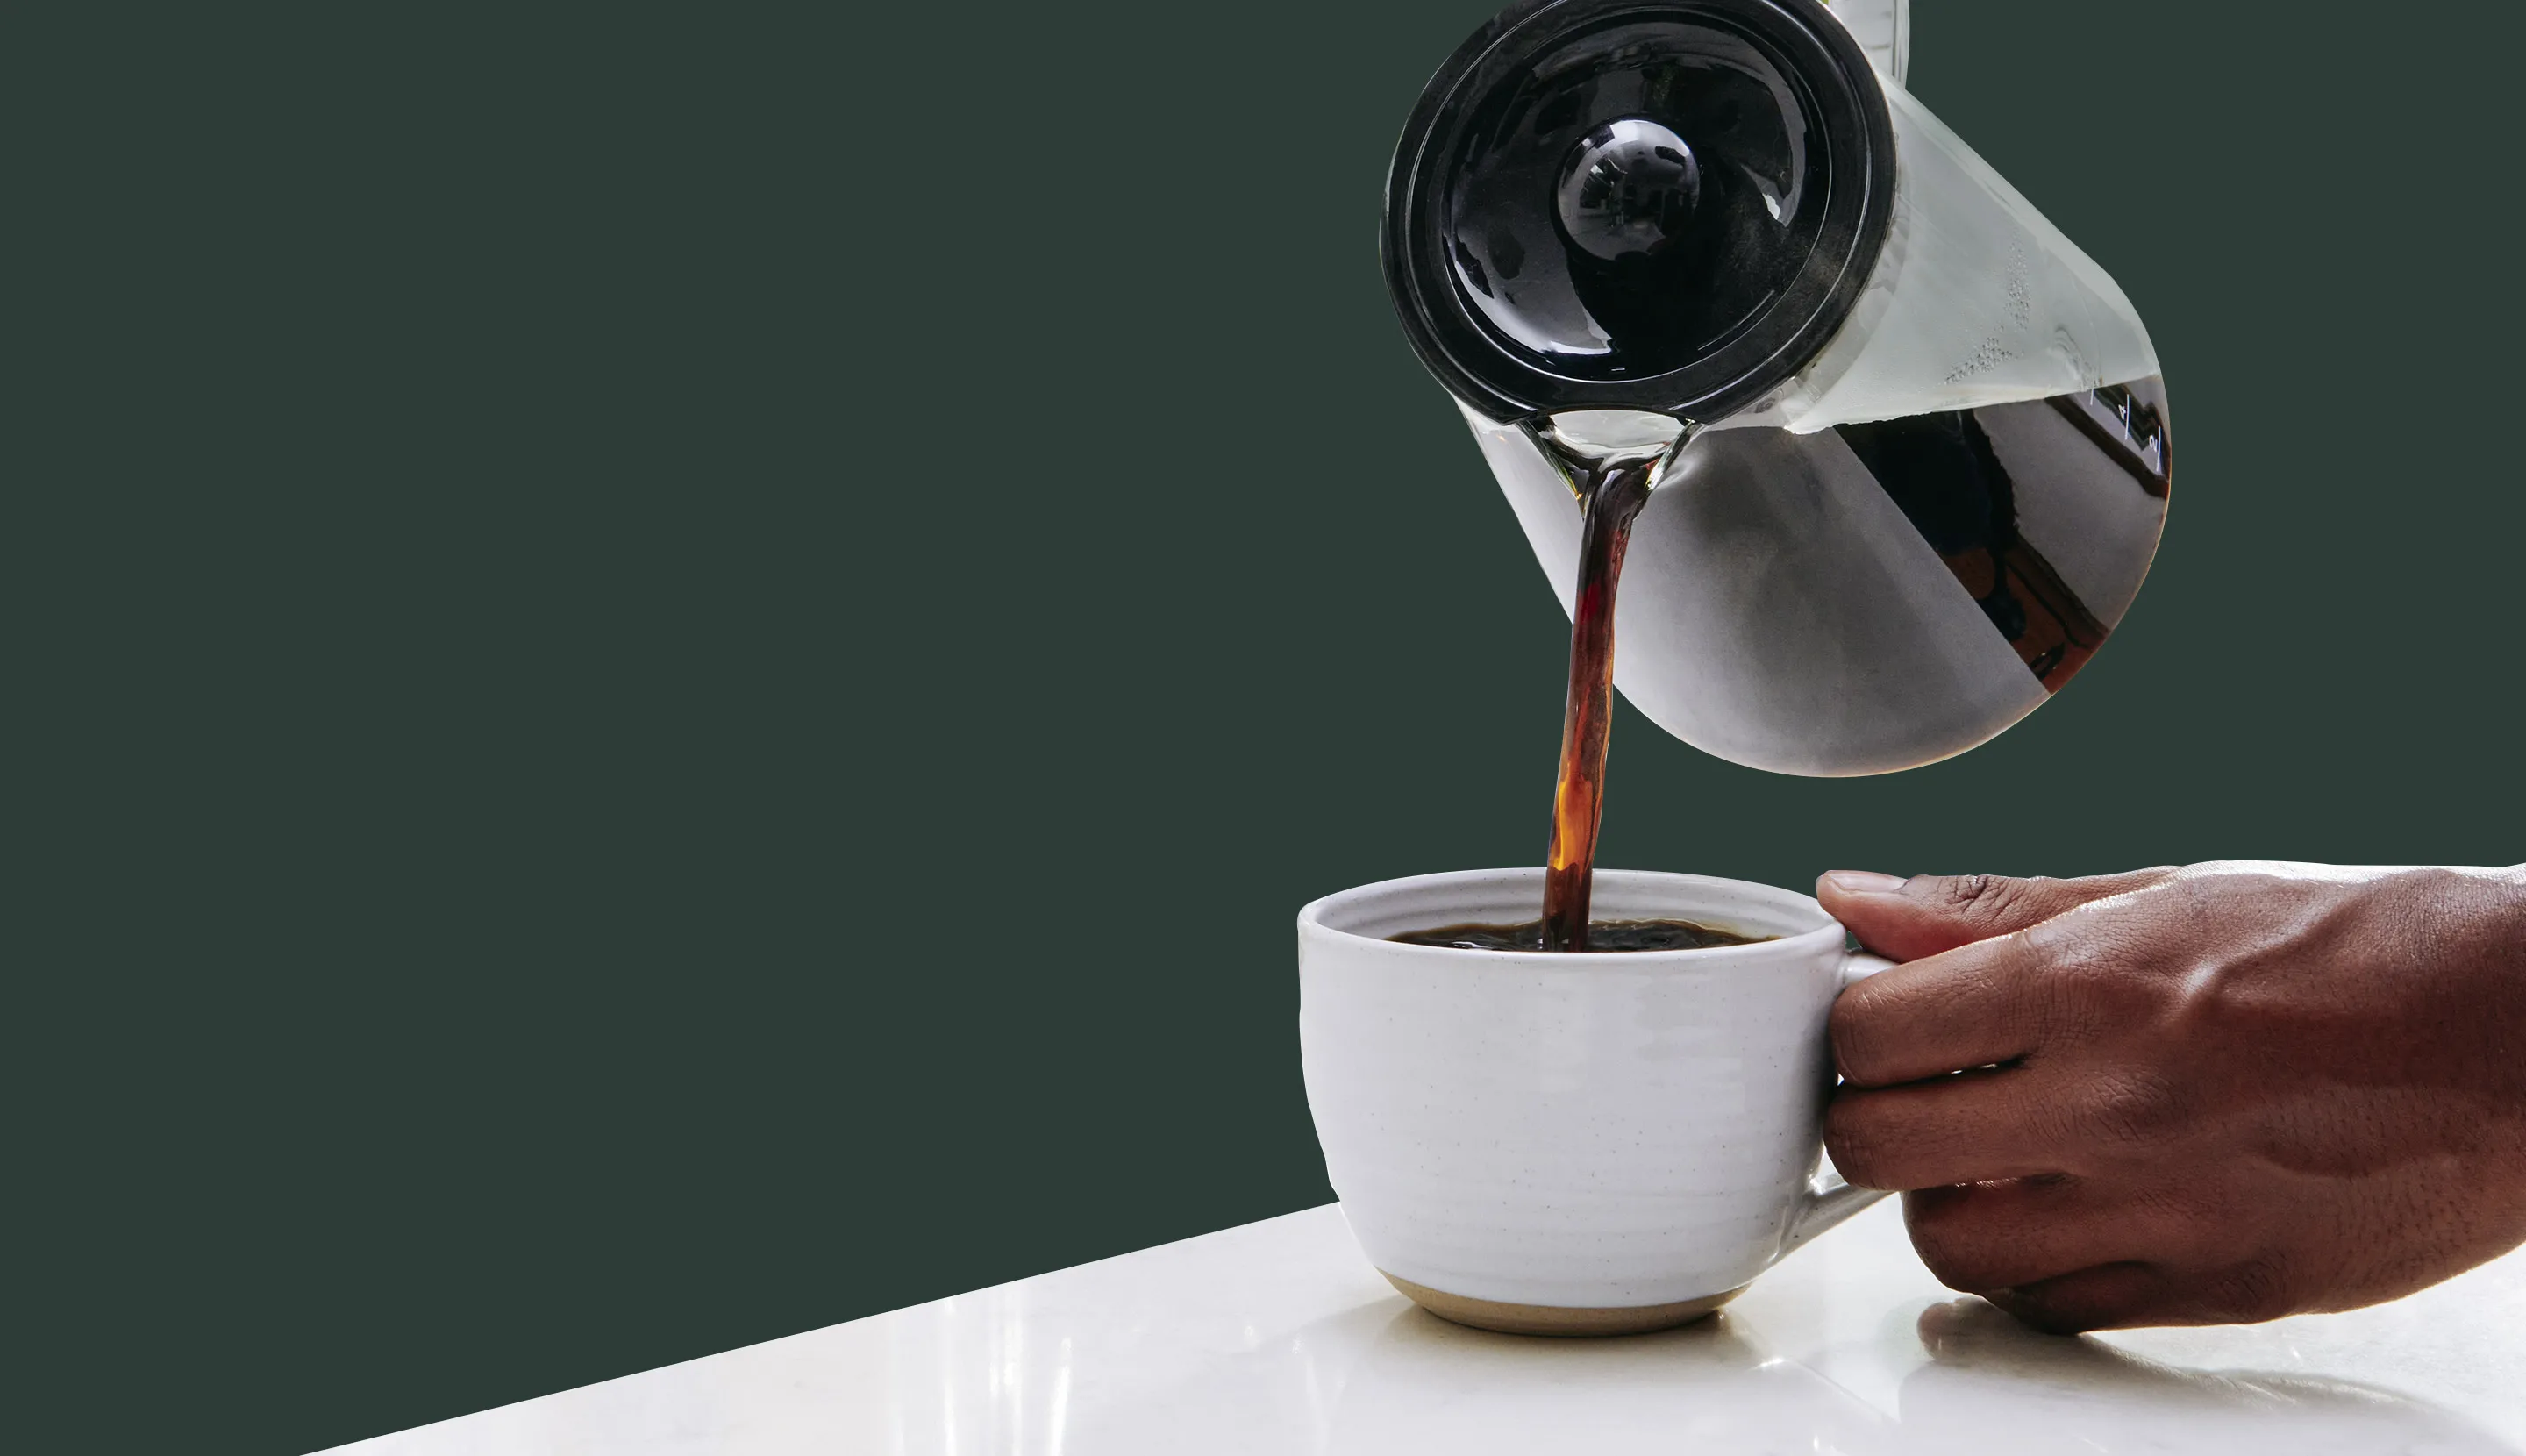 Starbucks Coffee Mug Coffee & Tea Accessories